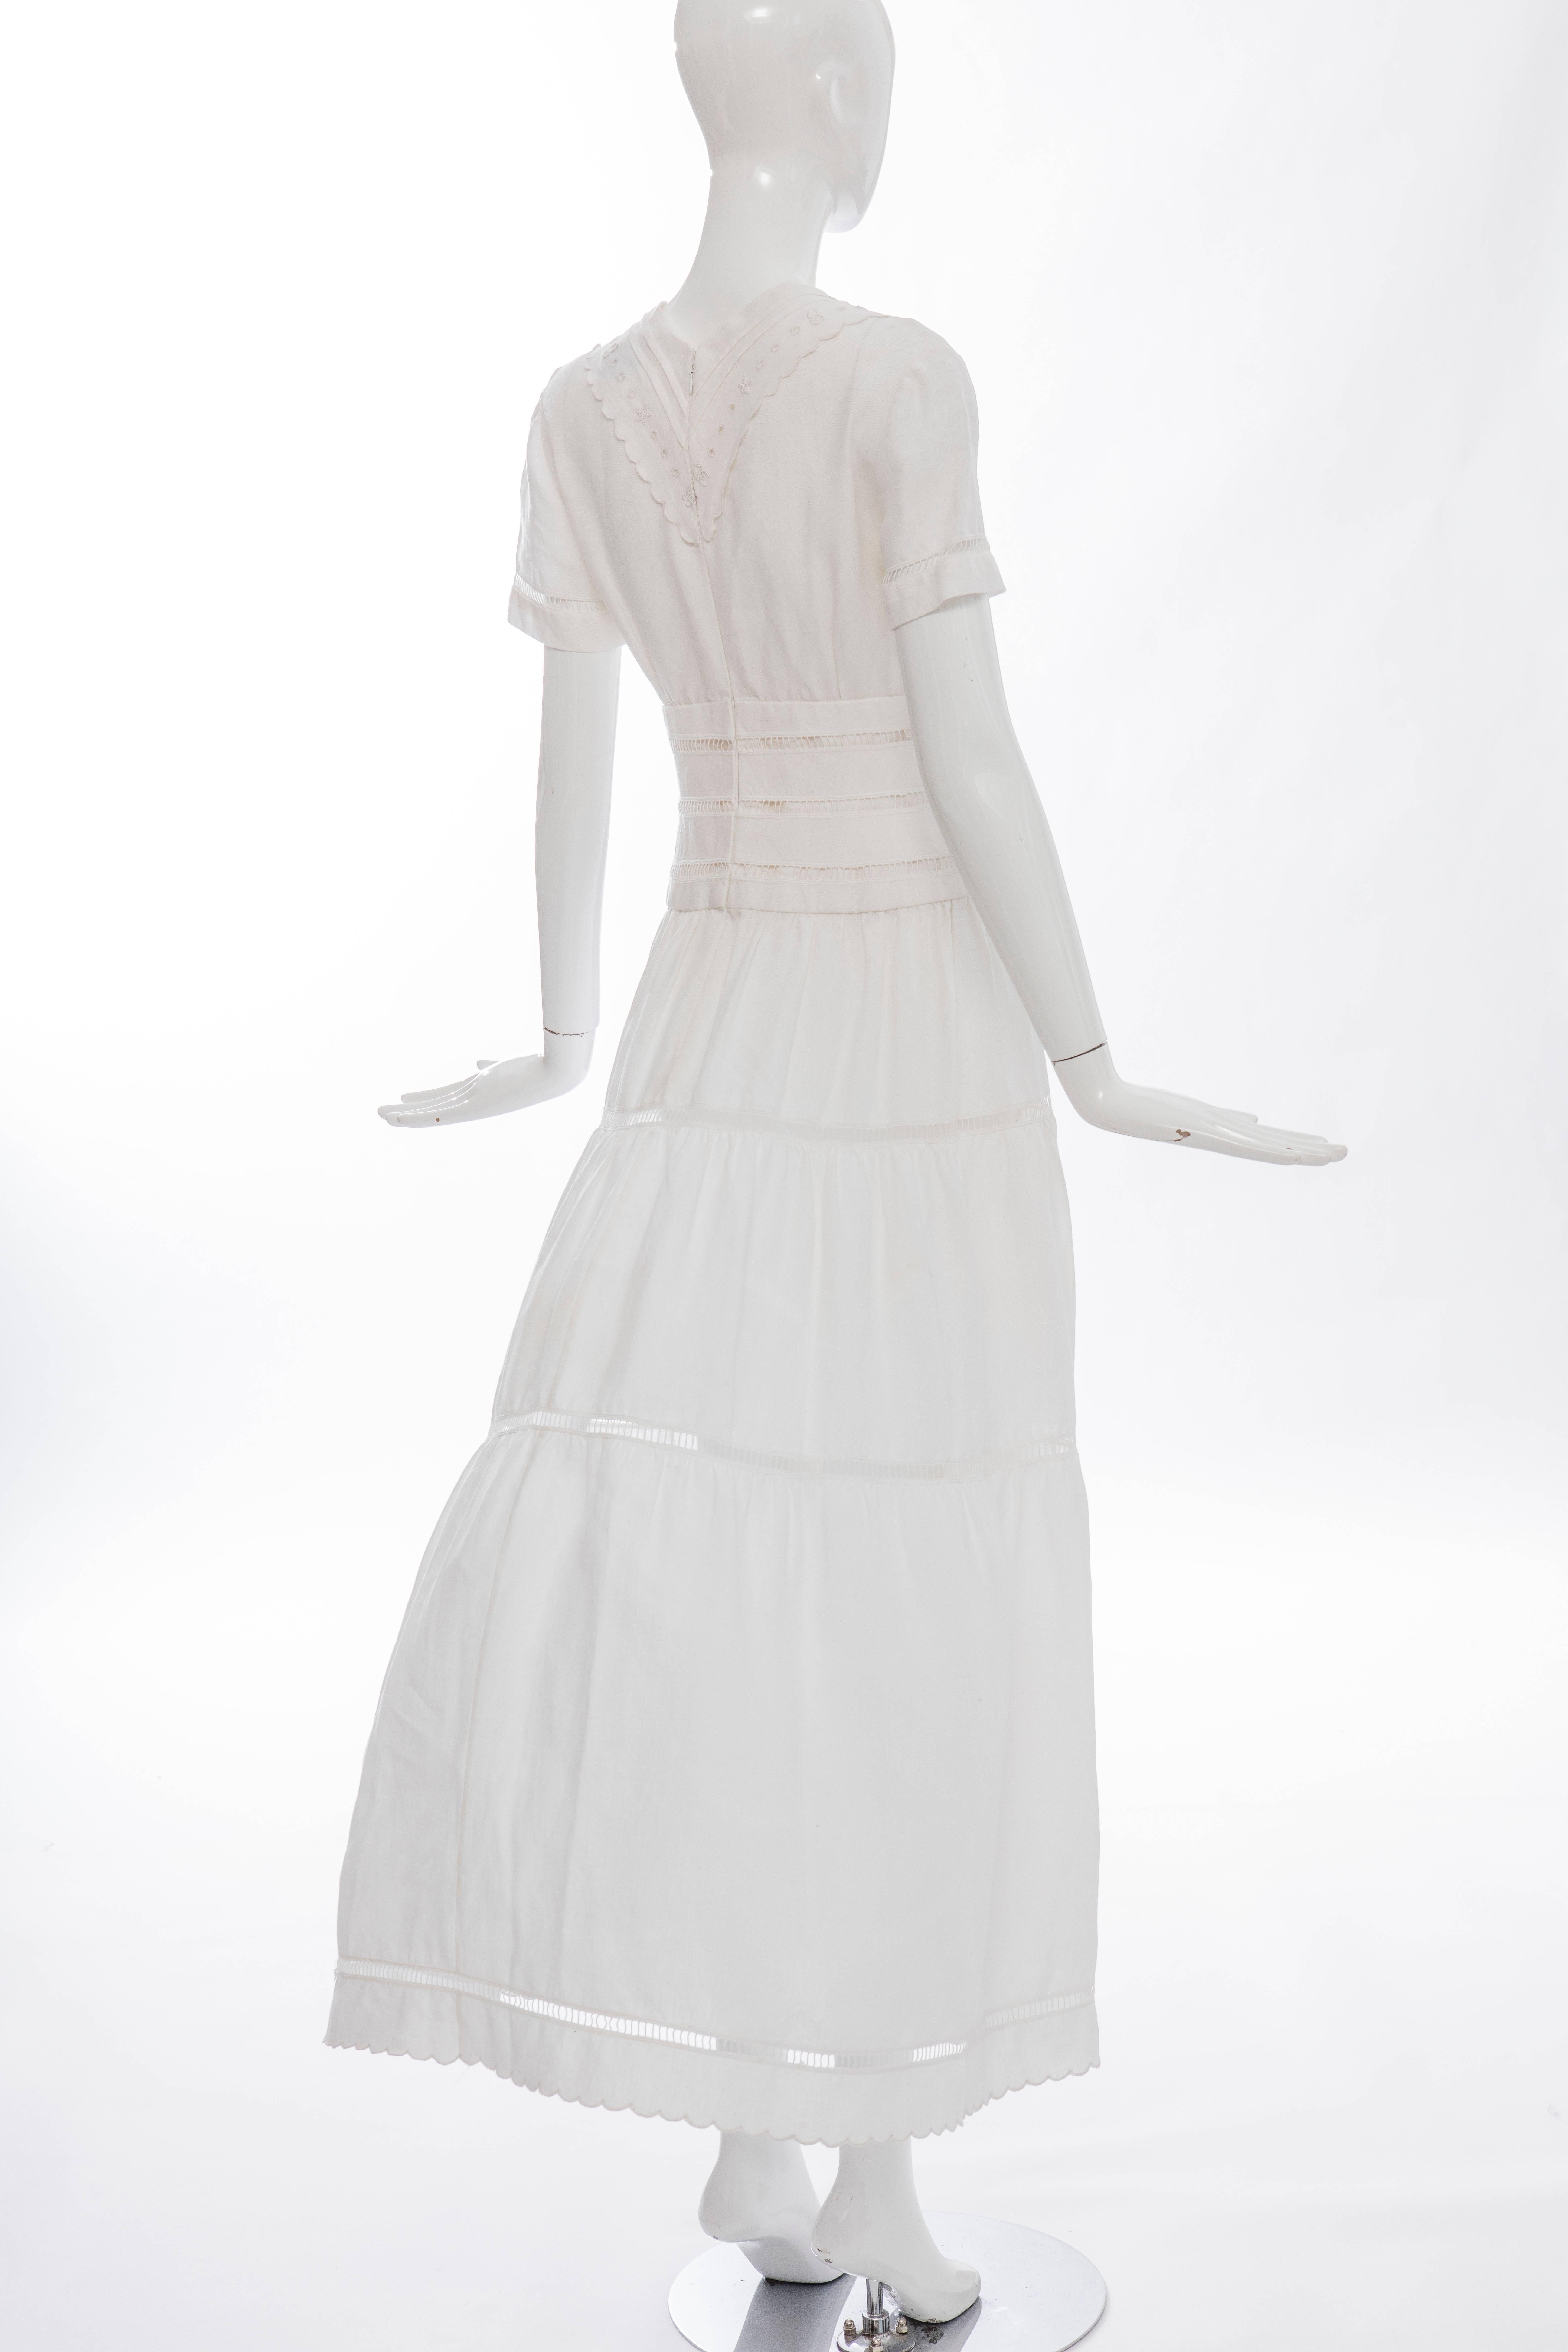 Chanel Short Sleeve Whitework Embroidered Linen Dress, Circa 1980's 2